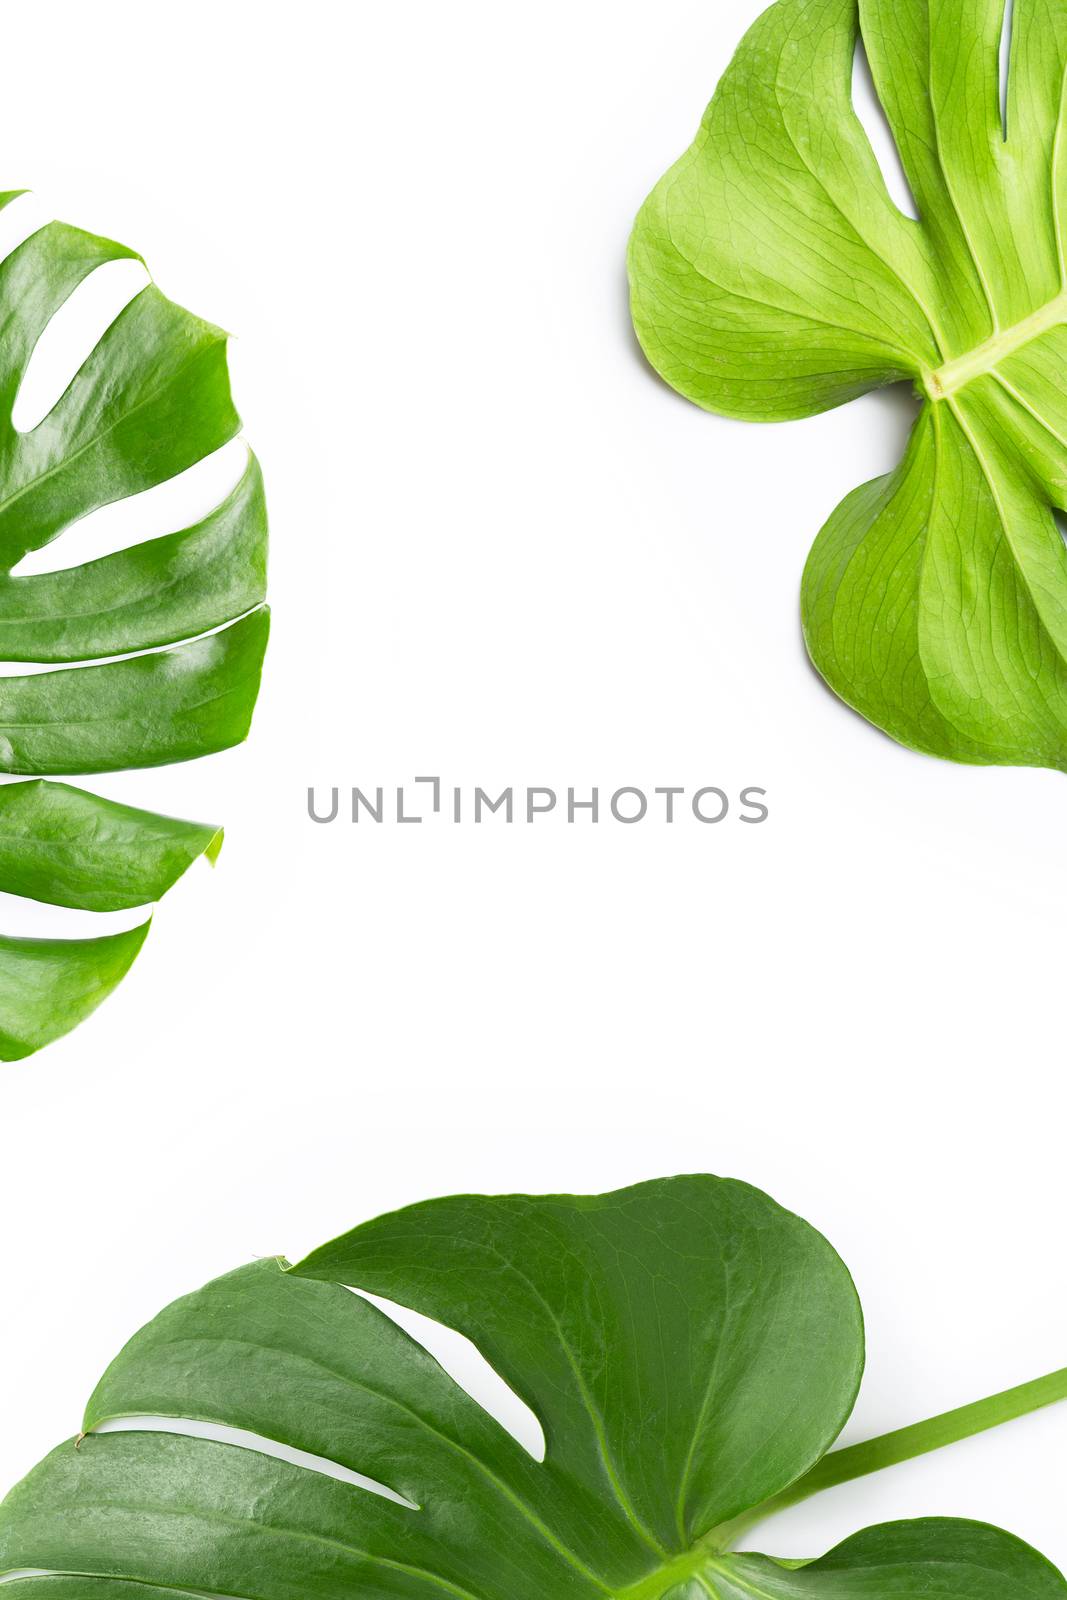 Monstera plant leaves on white background